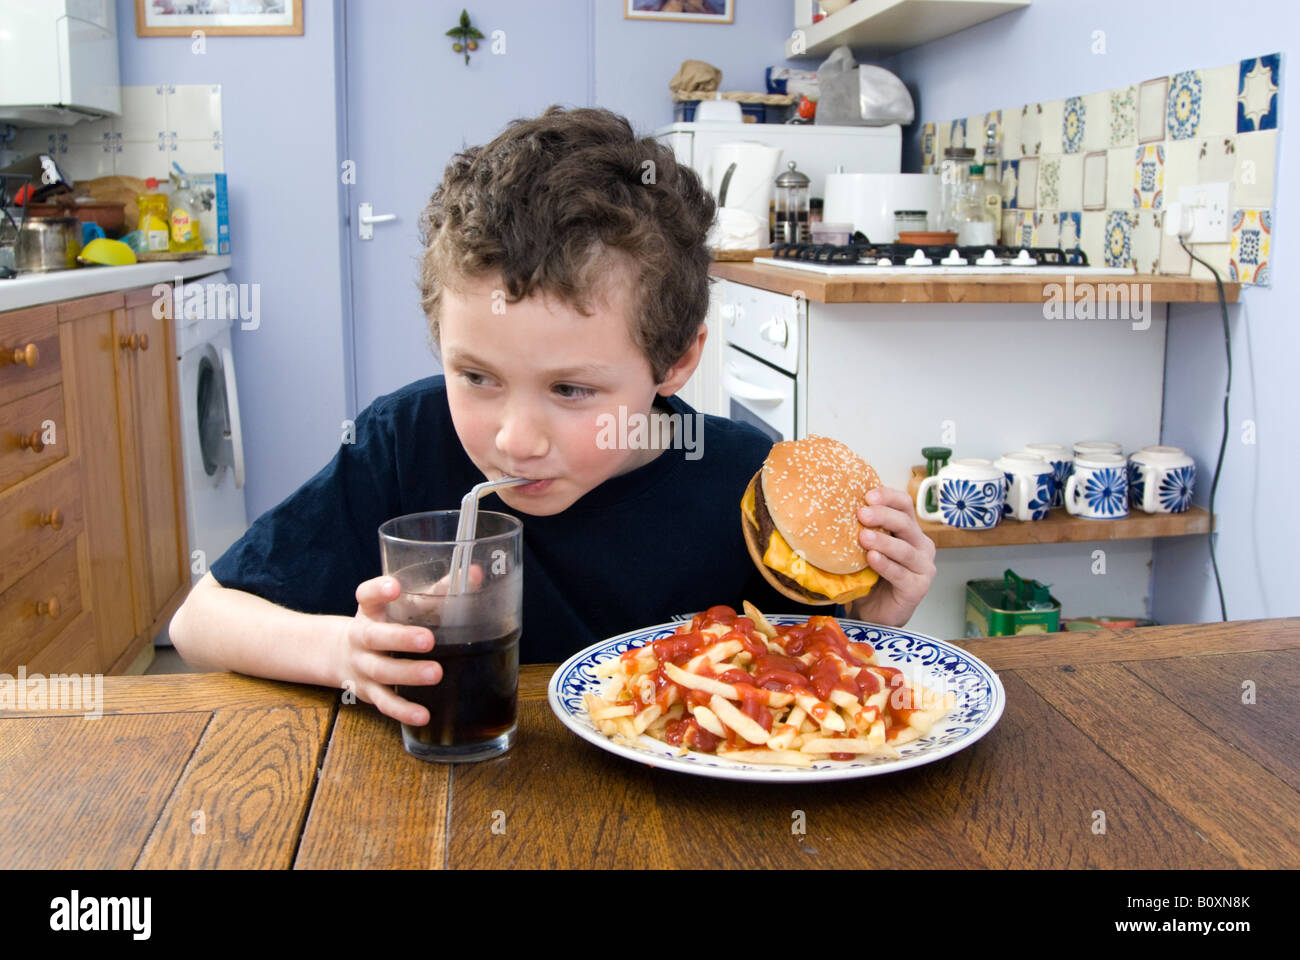 Boy eating junk food at home, UK Stock Photo